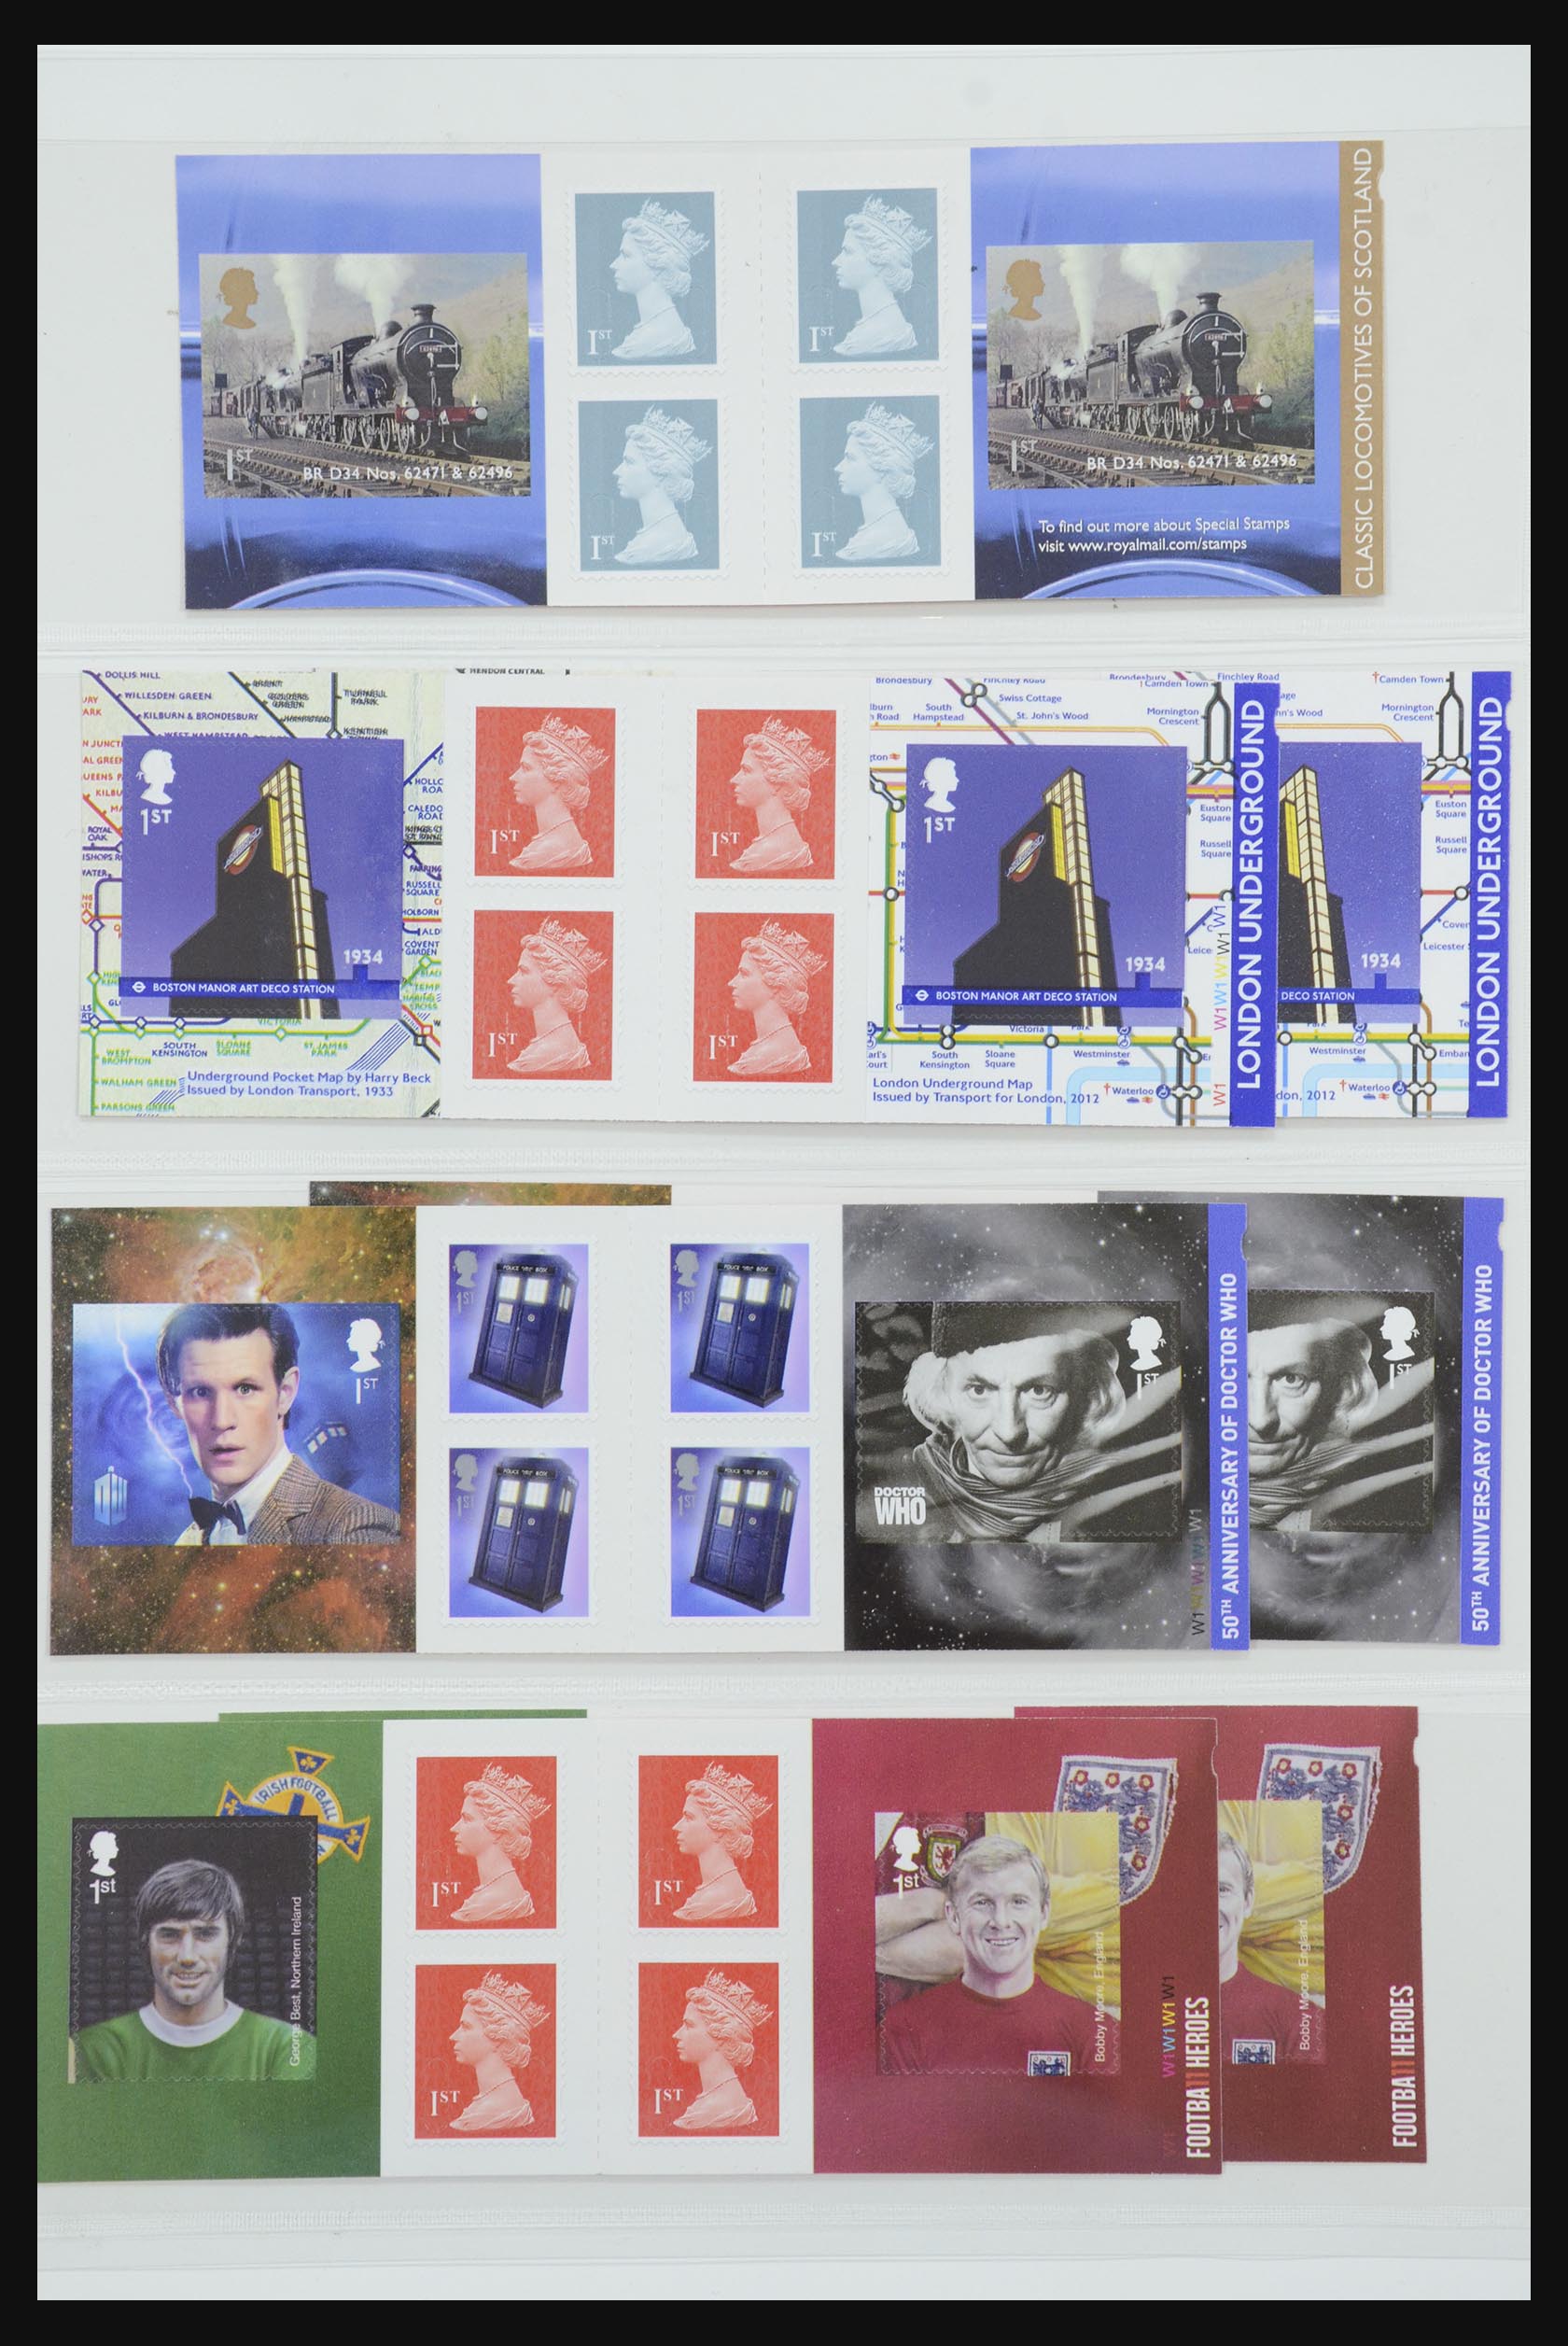 31959 386 - 31959 Great Britain stampbooklets 1987-2016!!